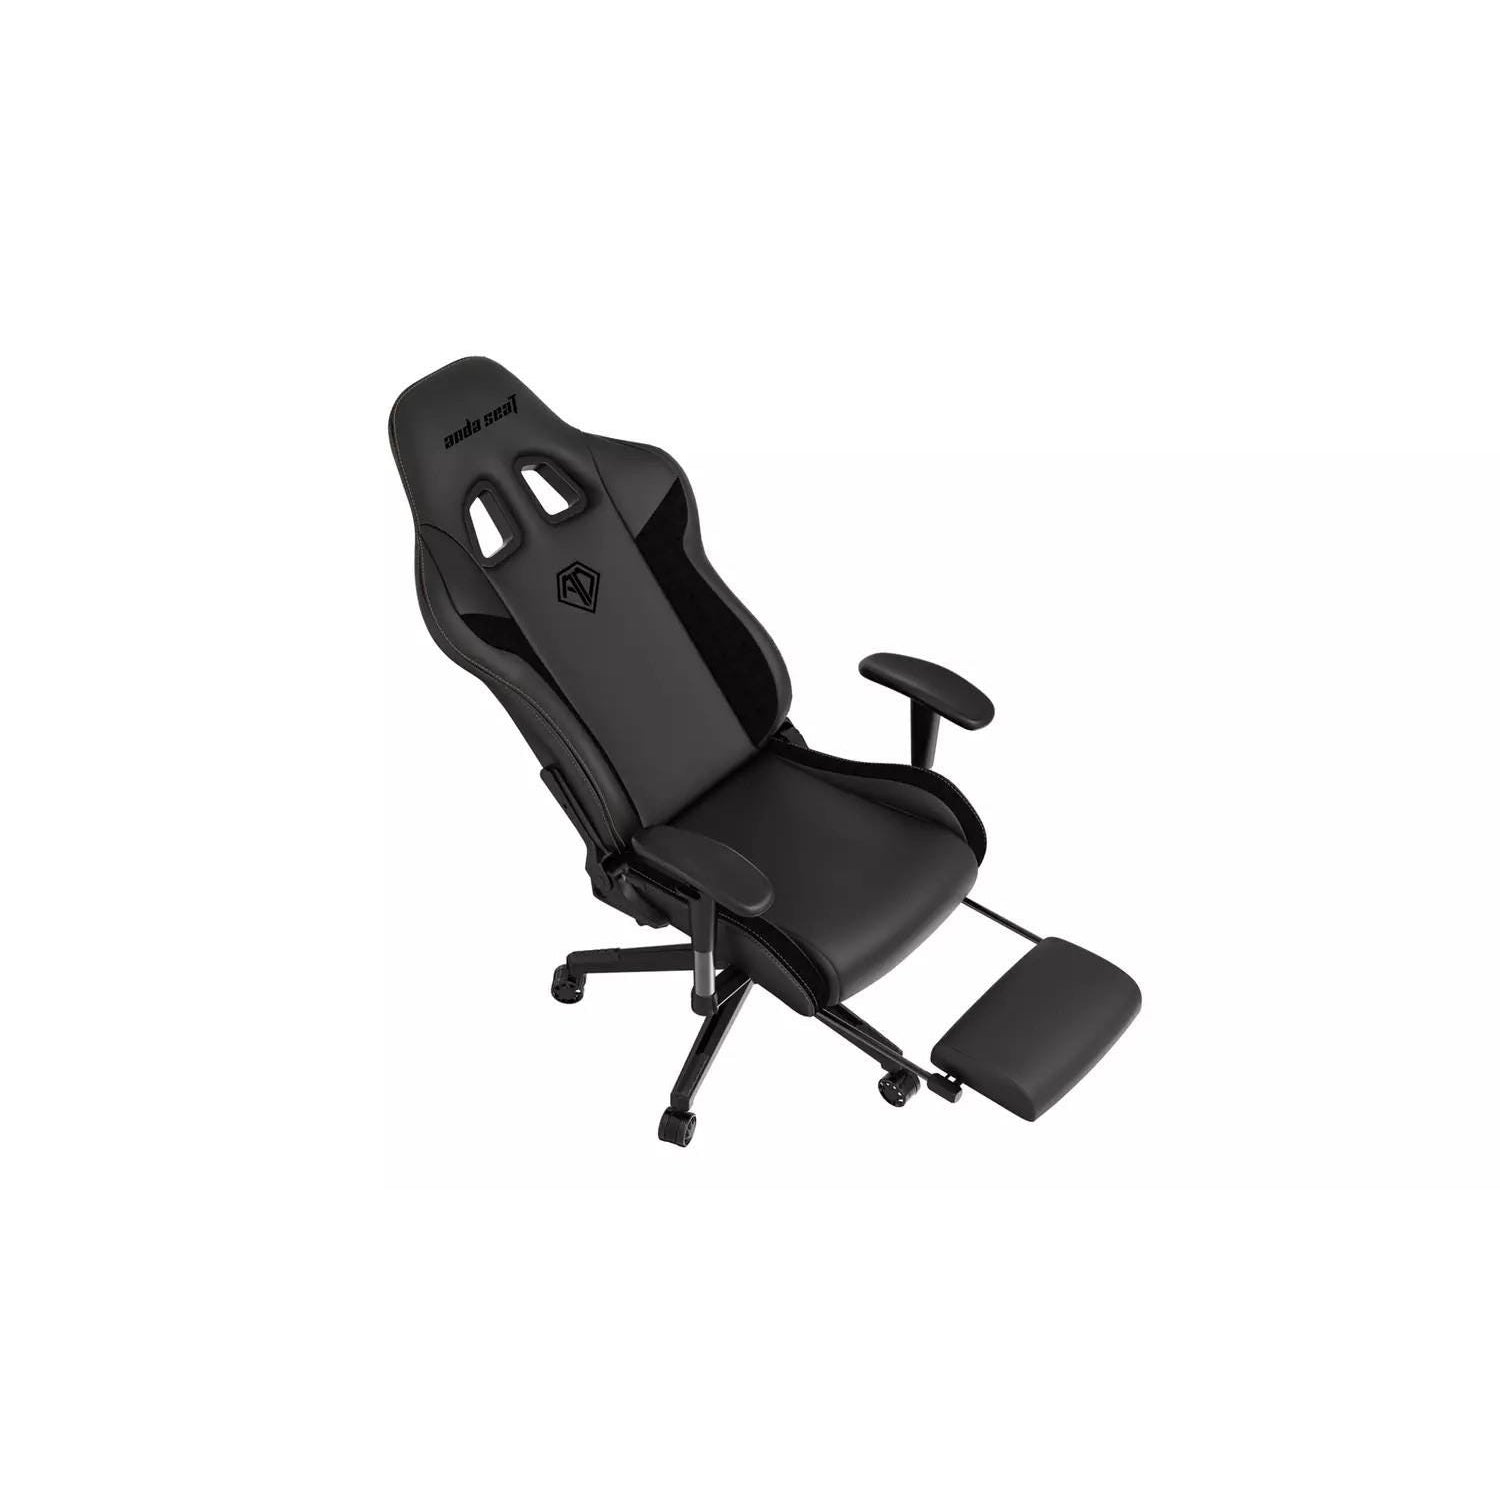 Anda Seat Jungle 2 Gaming Chair Black (AD5T-03-B-PVF) - Open Box